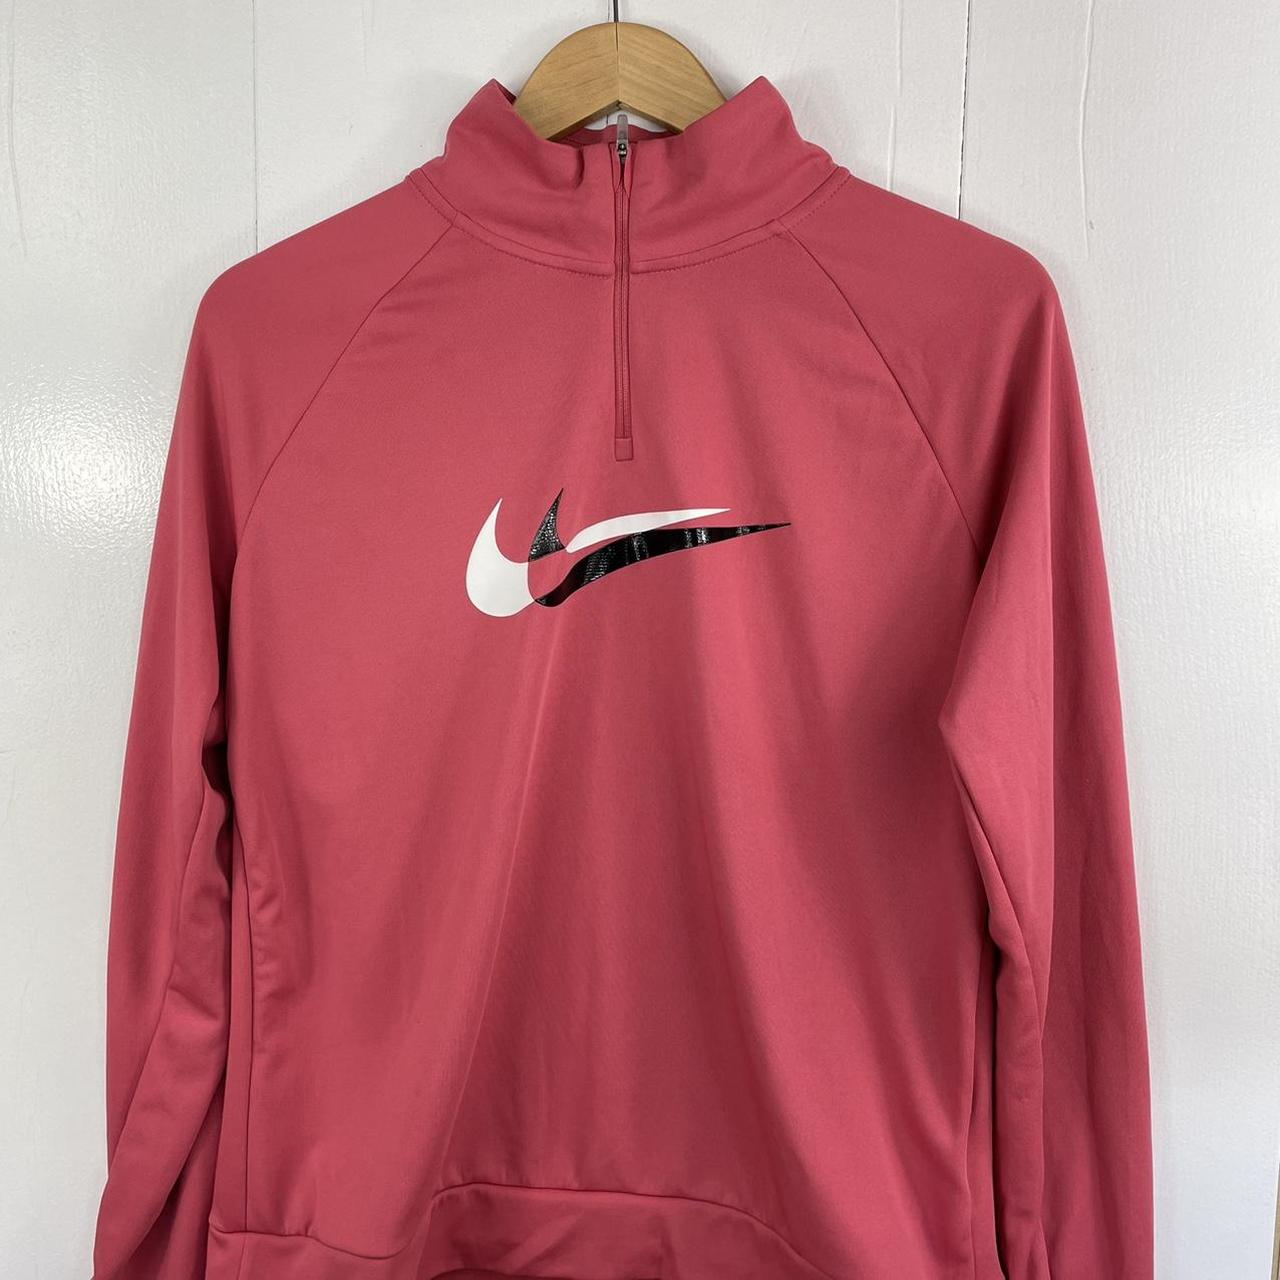 Nike Dri fit pink quarter zip jumper/top with double... - Depop